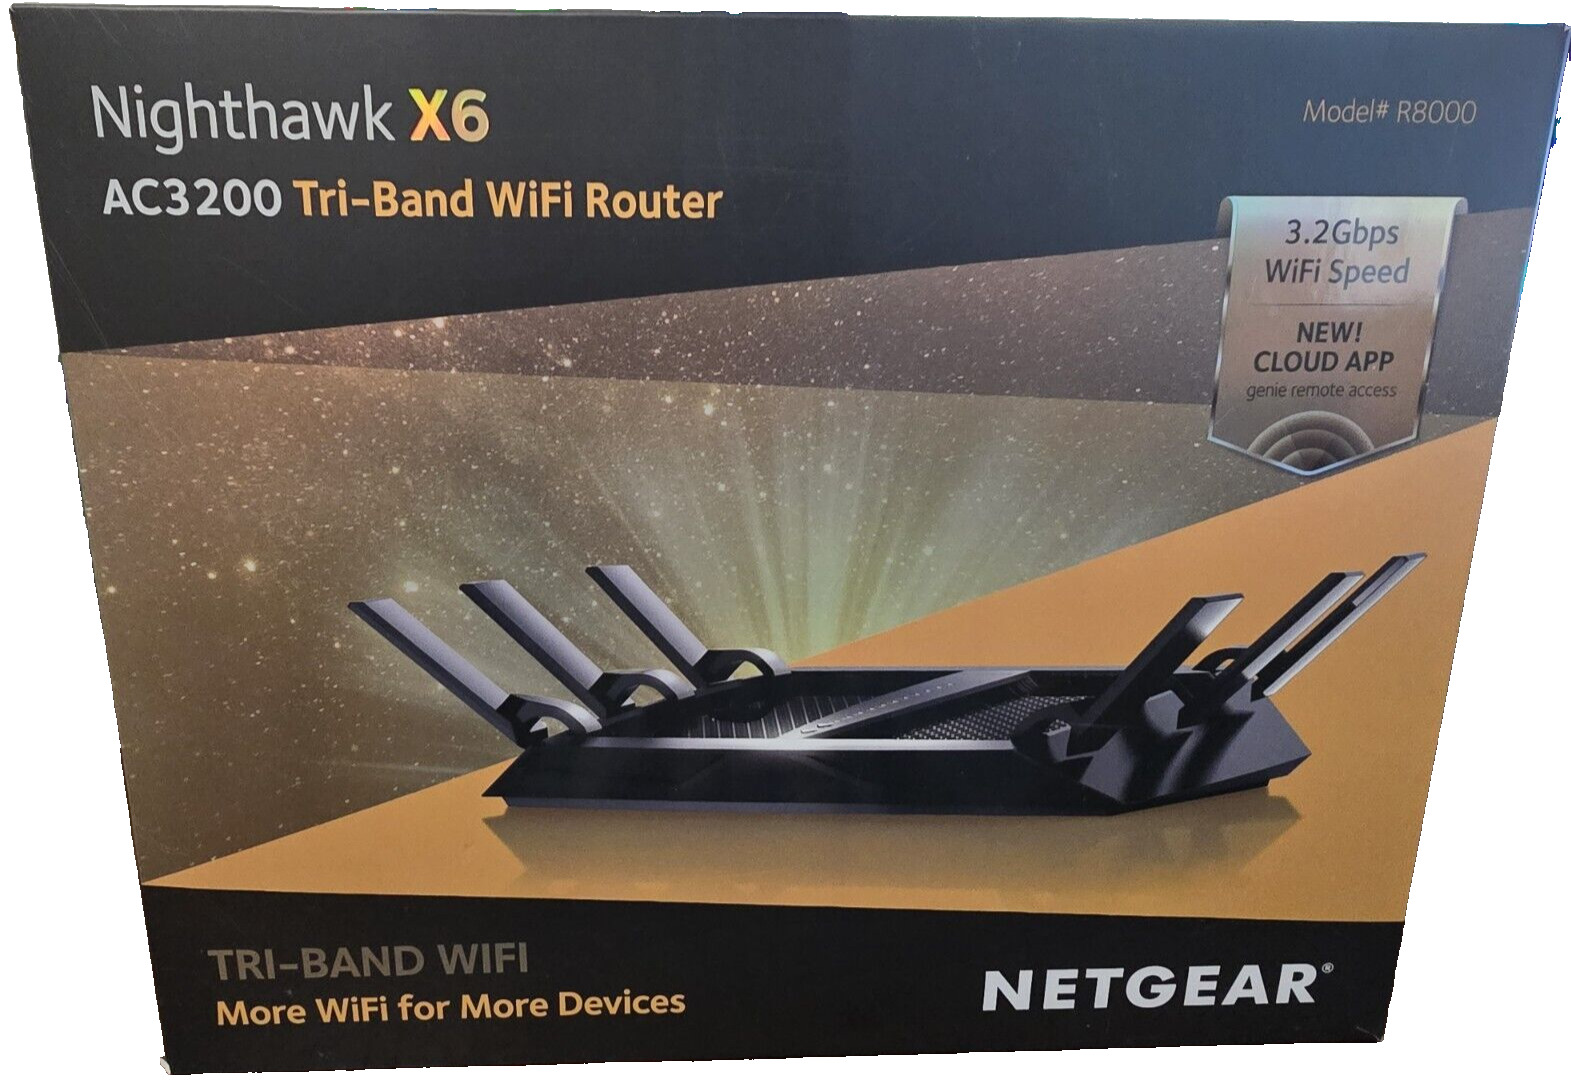 NETGEAR Nighthawk X6 AC3200 Tri-Band WiFi Router R8000-100NAS - Open box